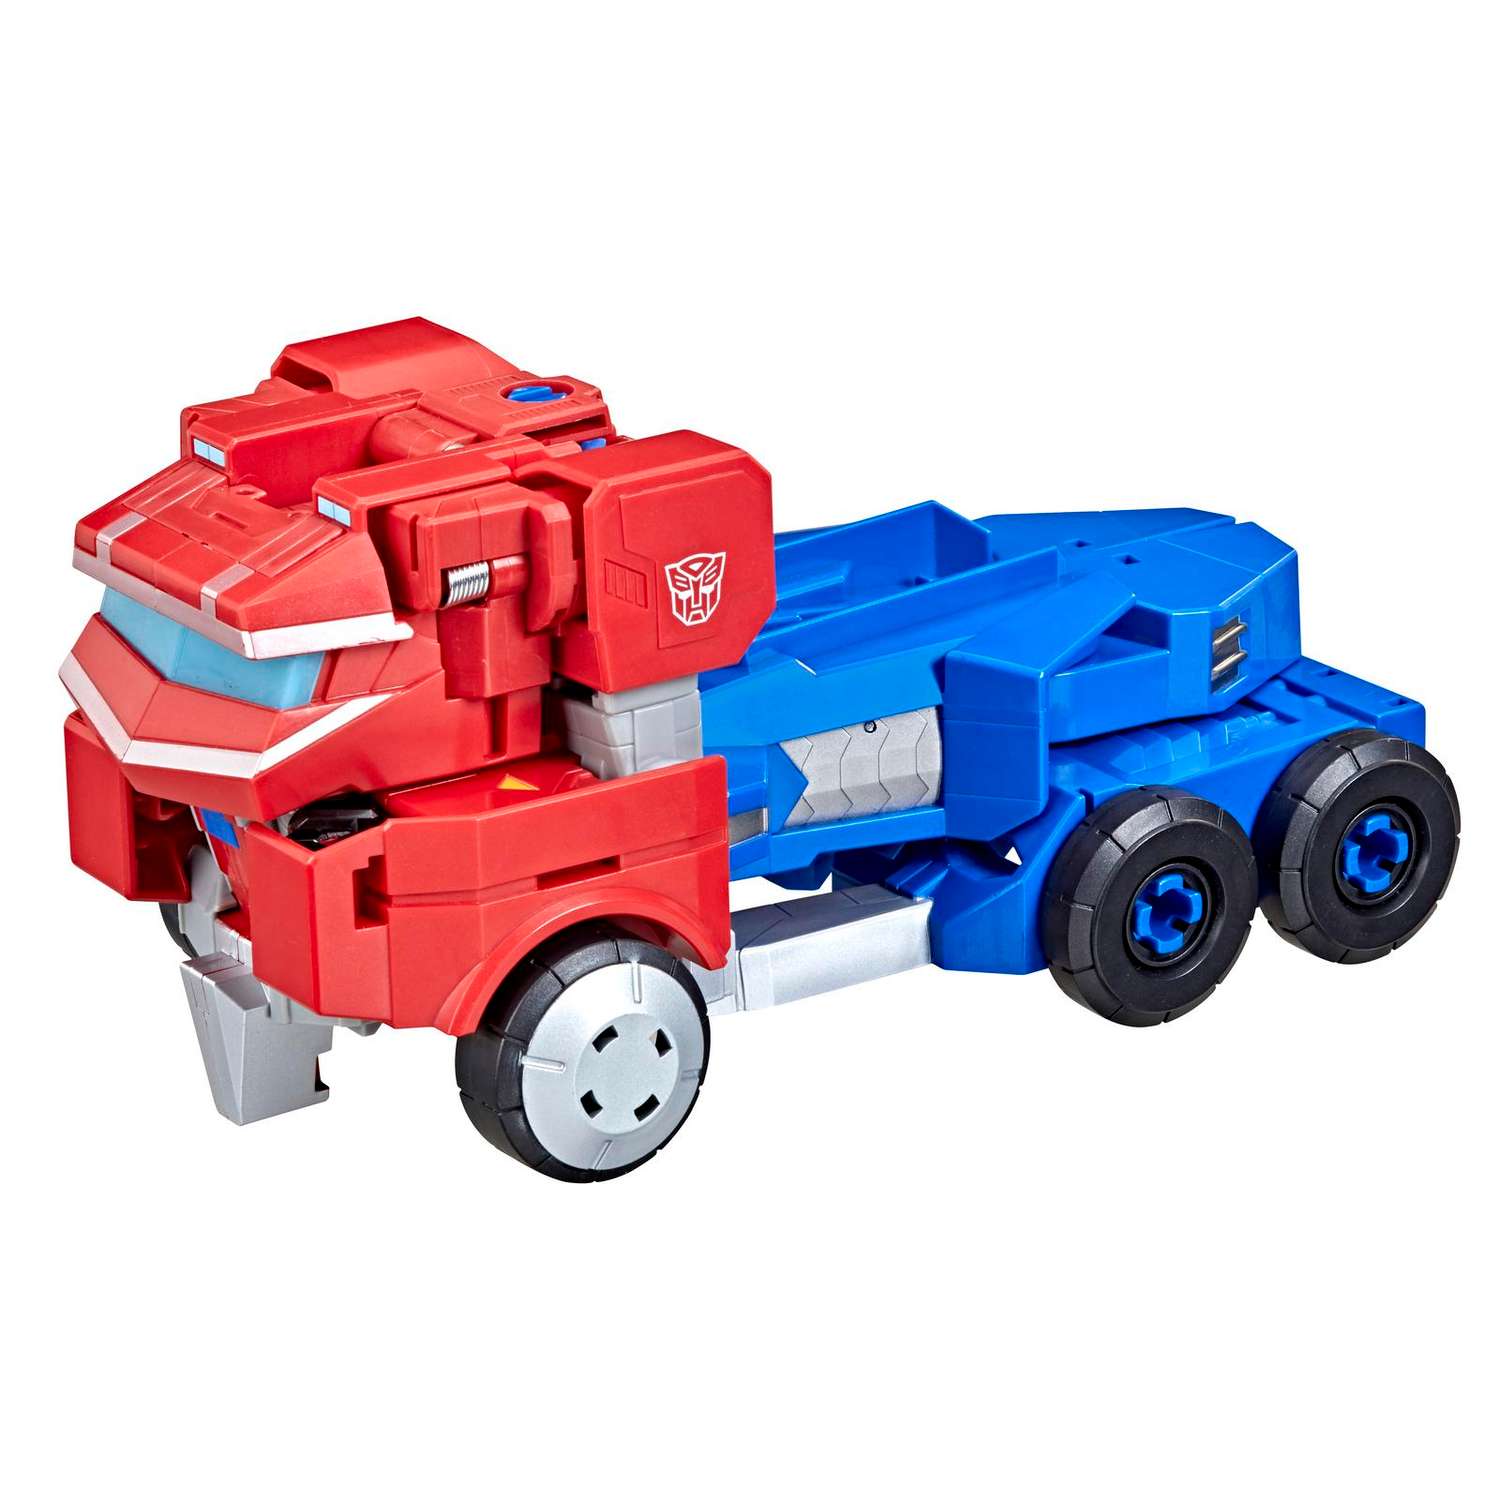 Фигурка Transformers Оптимус Прайм с автоматической трансформацией F27315X6 - фото 5